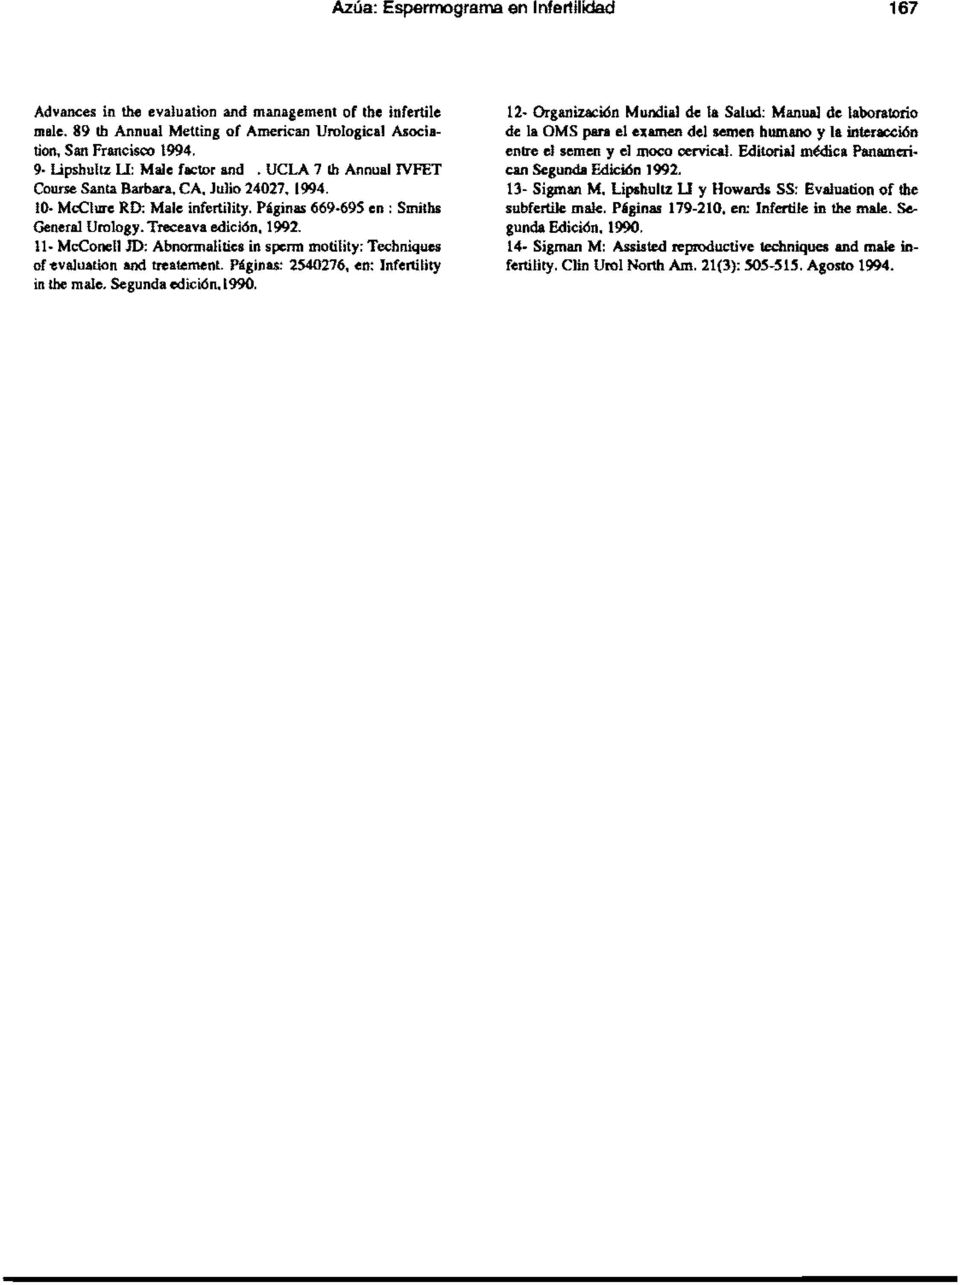 1992. 11- McConell ID: Abnormalities in sperm motility: Techniques ohvaluation and traatement. Páginas: 2540276, en: Infertility in the maleo Segunda edición.1990.